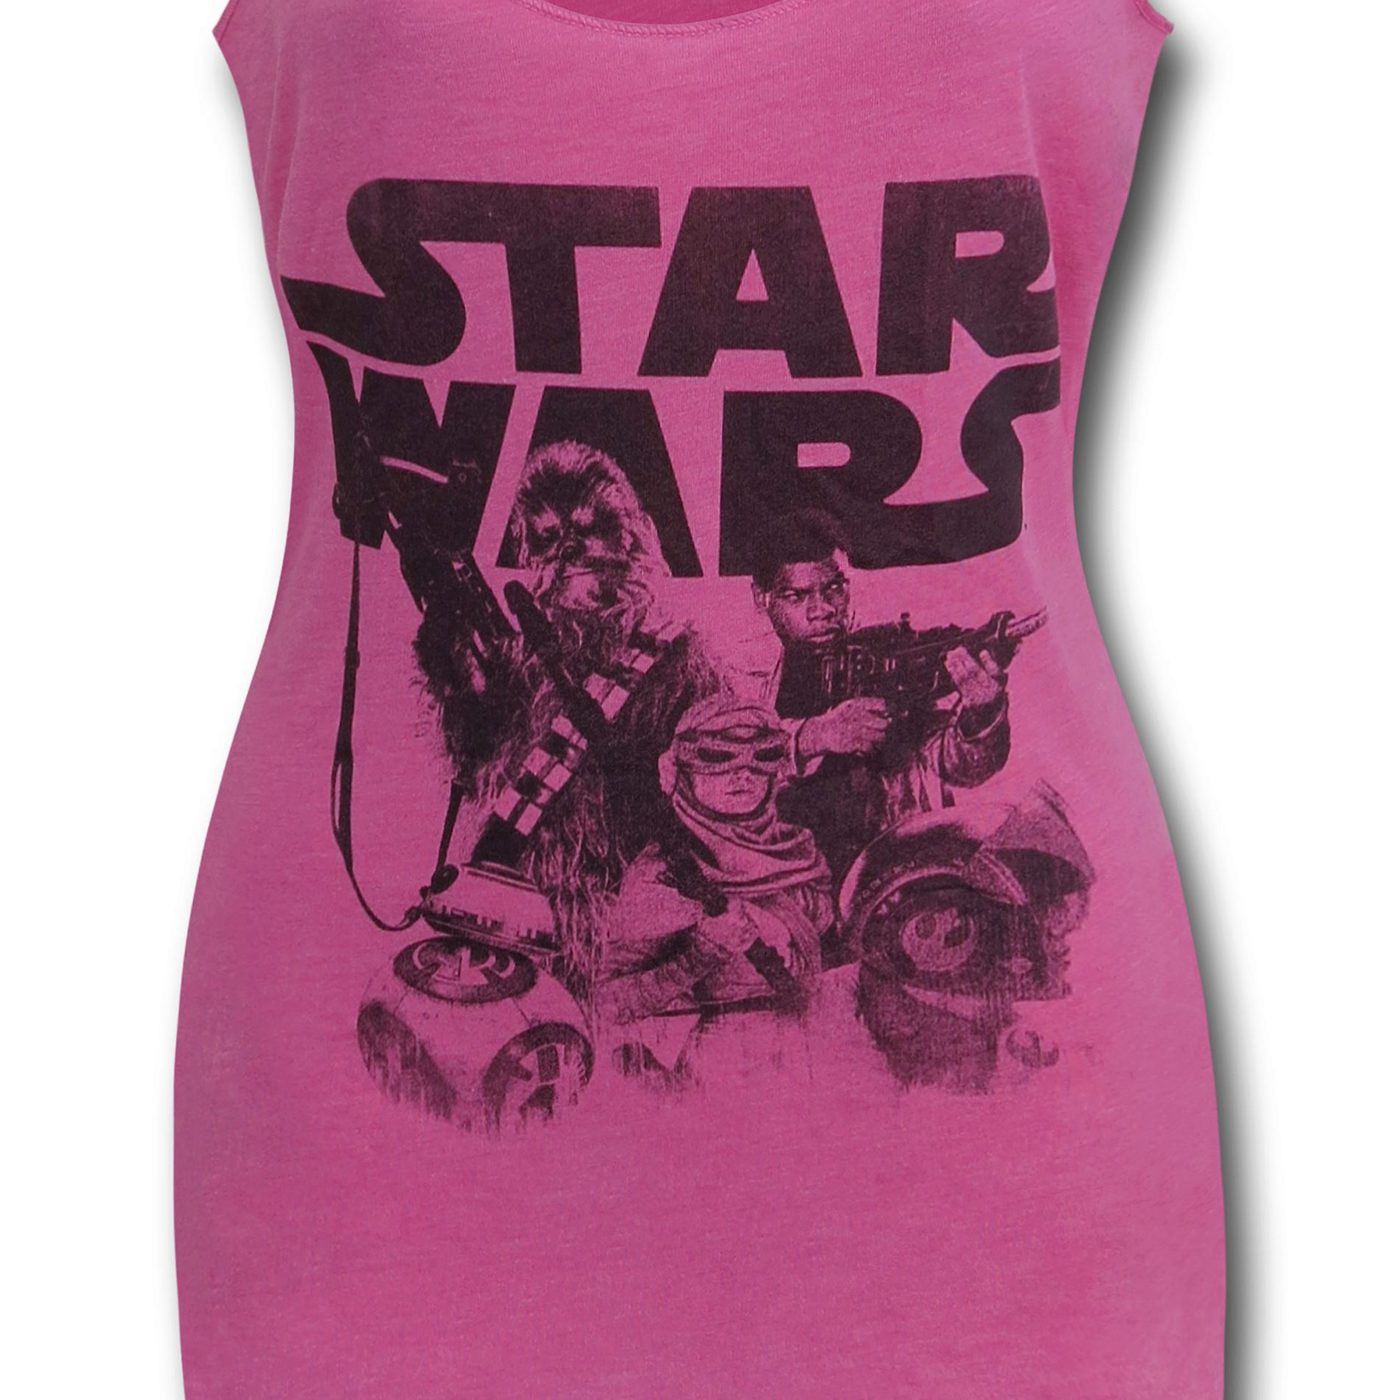 Star Wars Force Awakens Women's Pink Tank Top